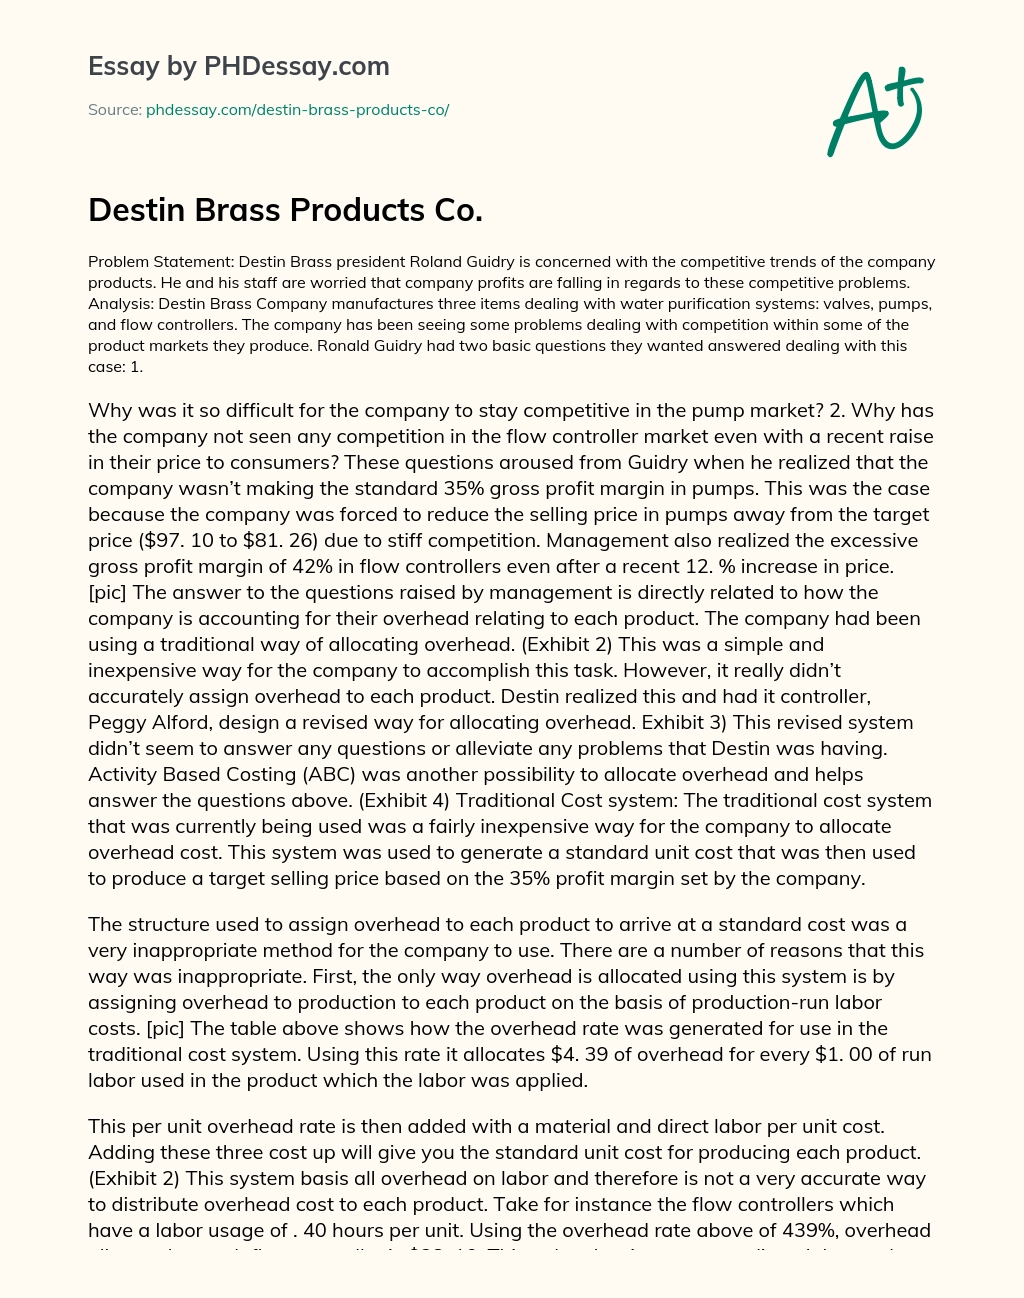 Destin Brass Products Co. essay